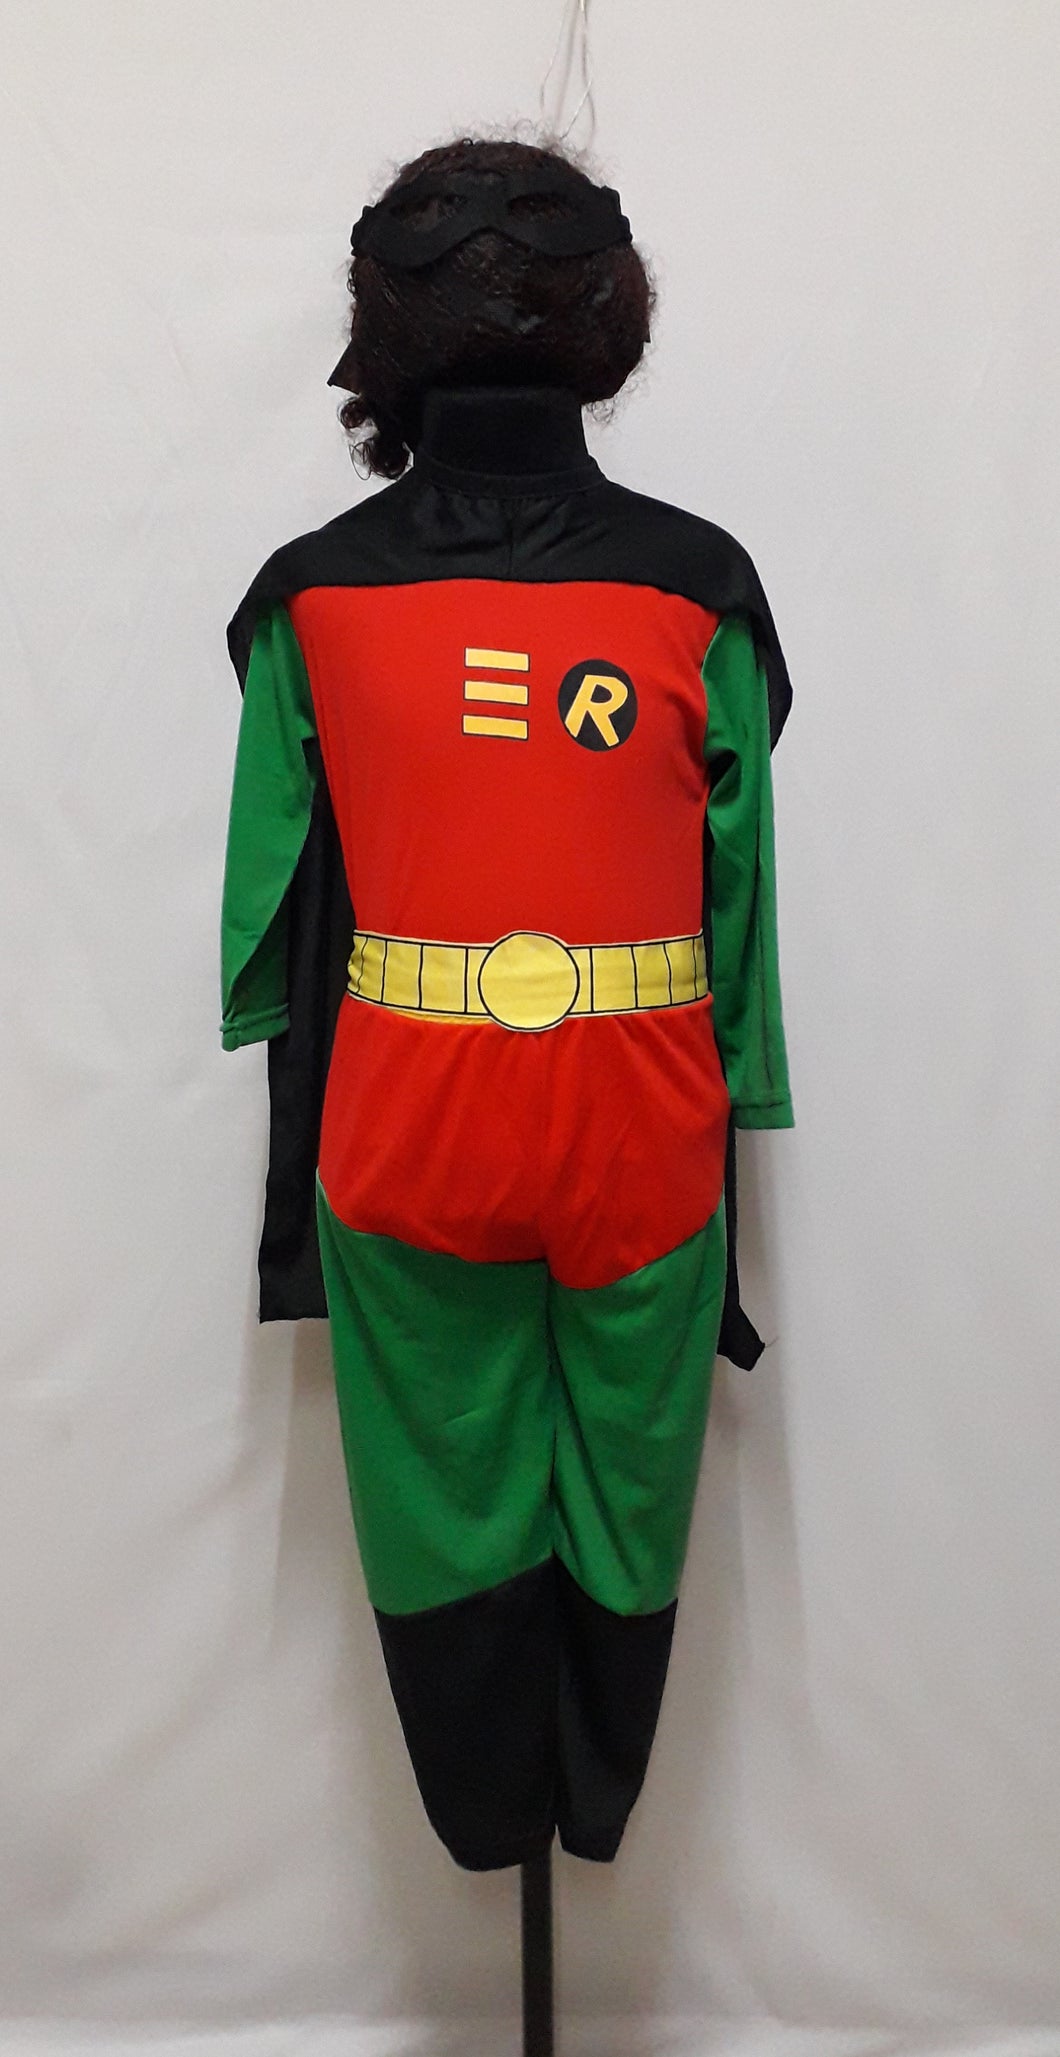 Robin costume for kids ( 4-6yo)